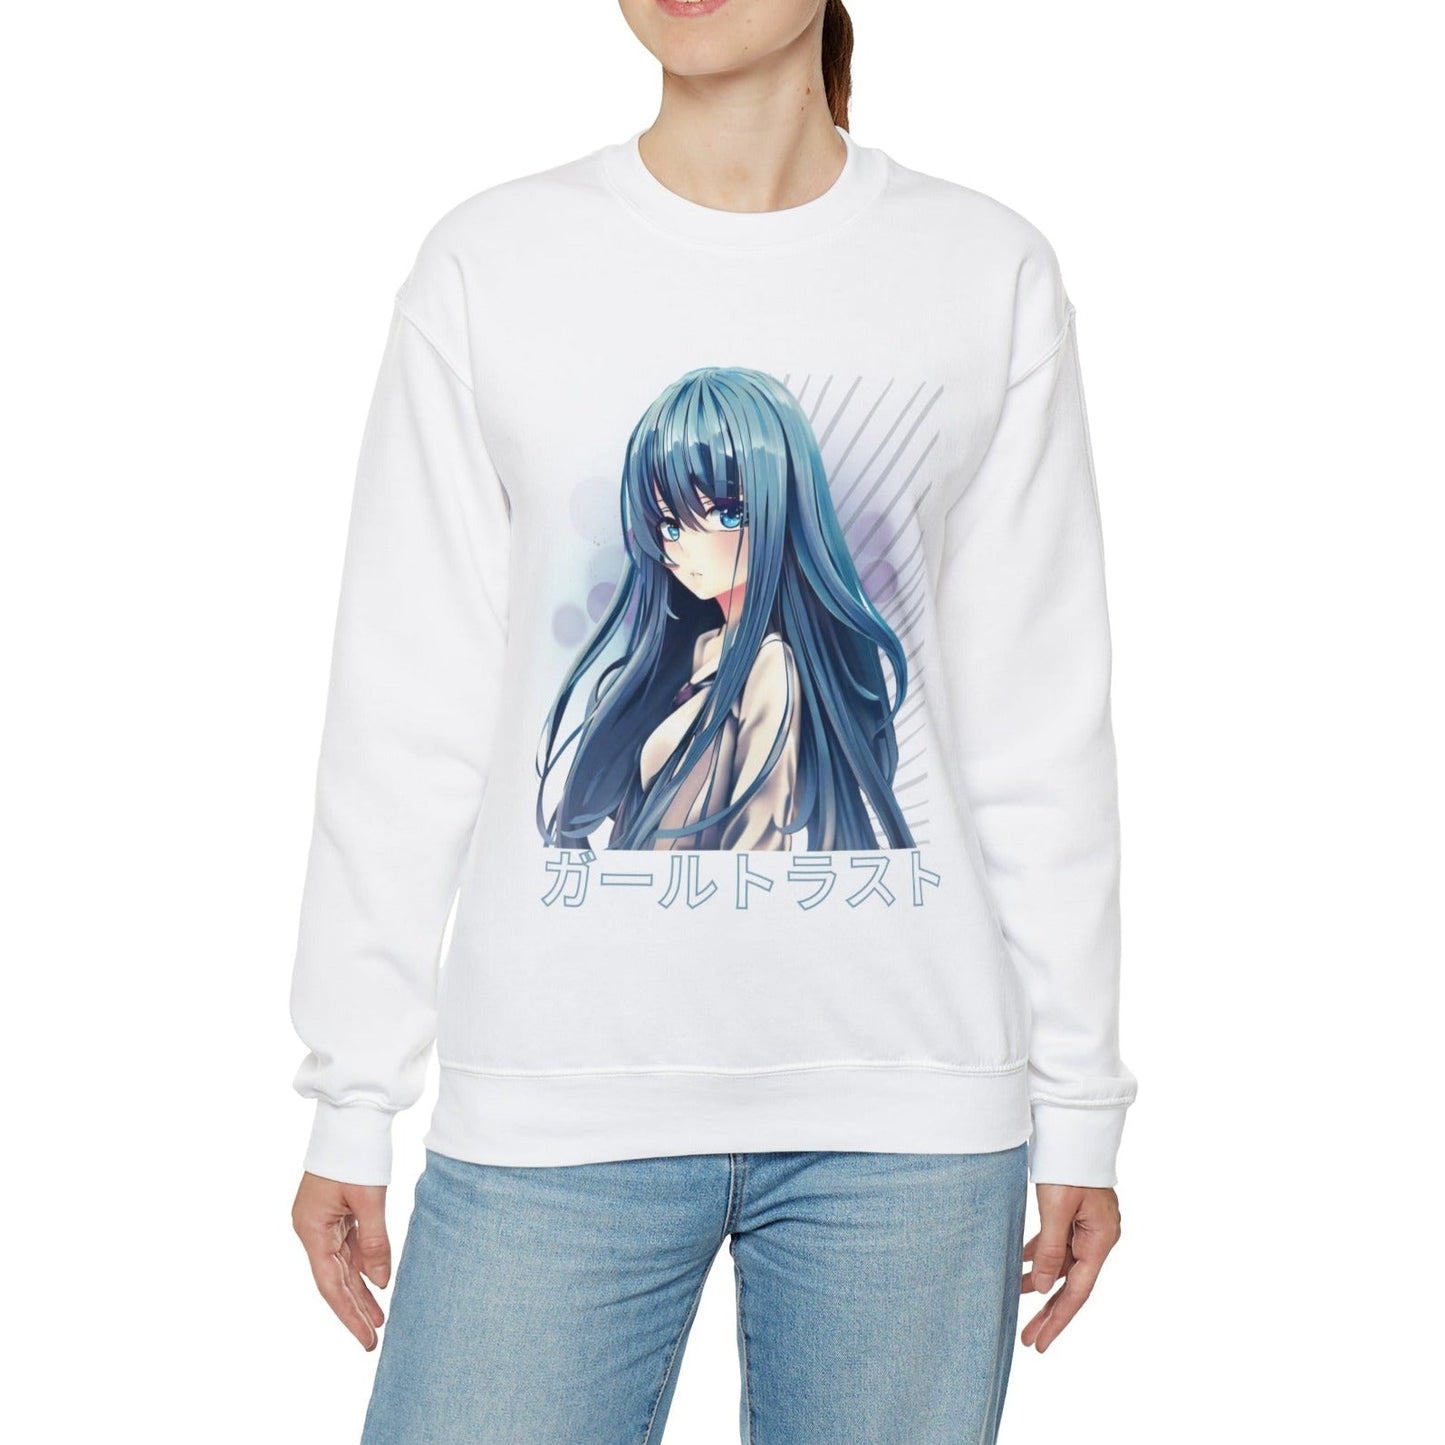 Blue Hair Anime Sweatshirt